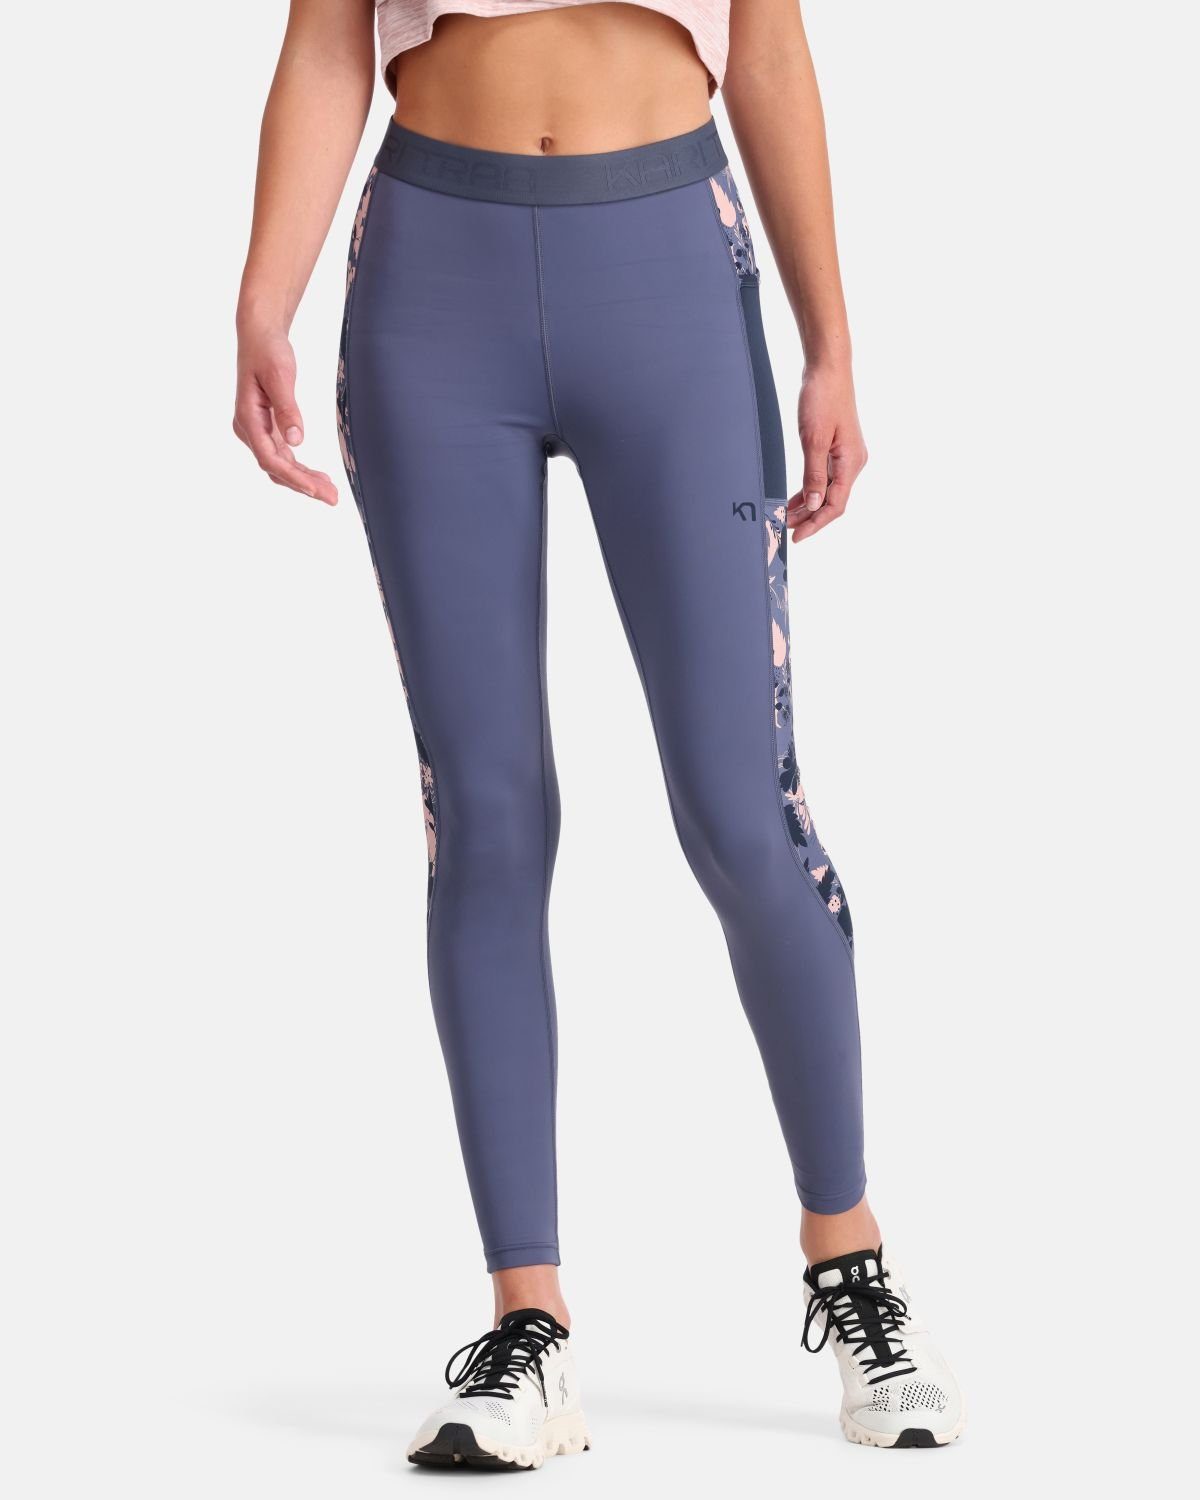 S - XL Women Yoga Suit Zipper Sports Vest High Waist Pants With Pockets  Tight Tank Tops Gym Sports Fitness Set Streetwear A124 - AliExpress